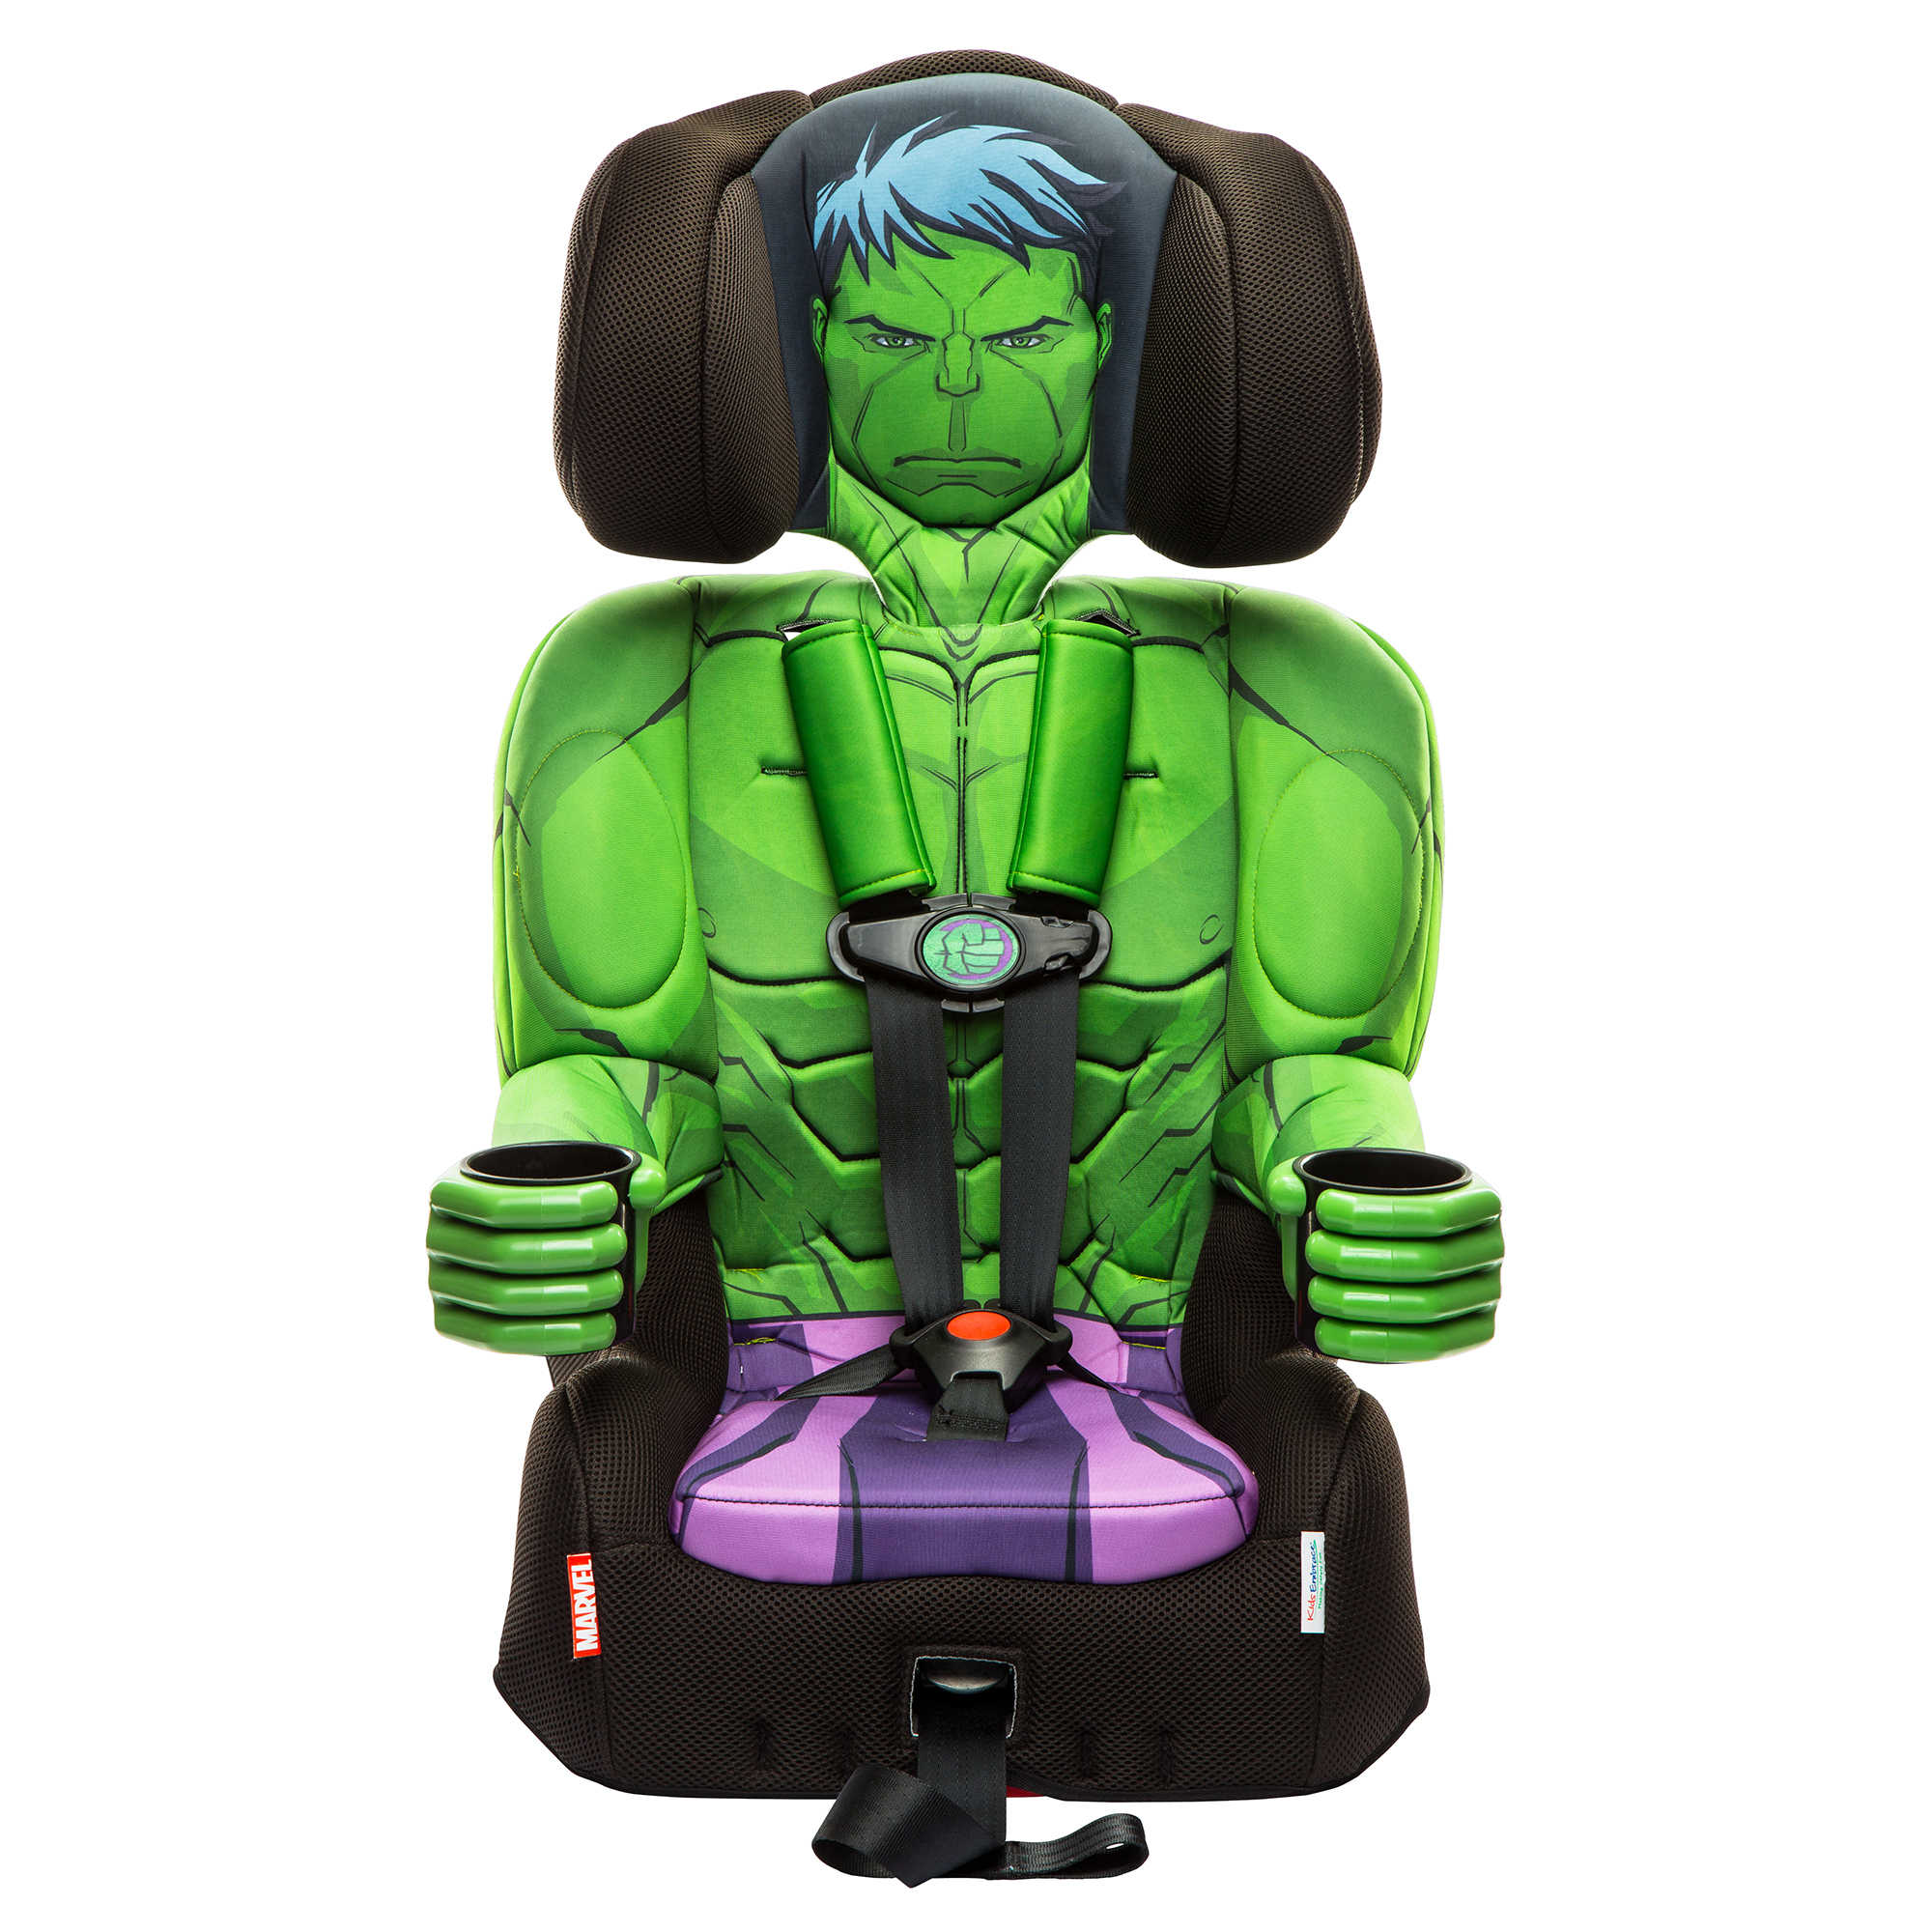 KidsEmbrace Marvel Comics Hulk Combination Booster Car Seat